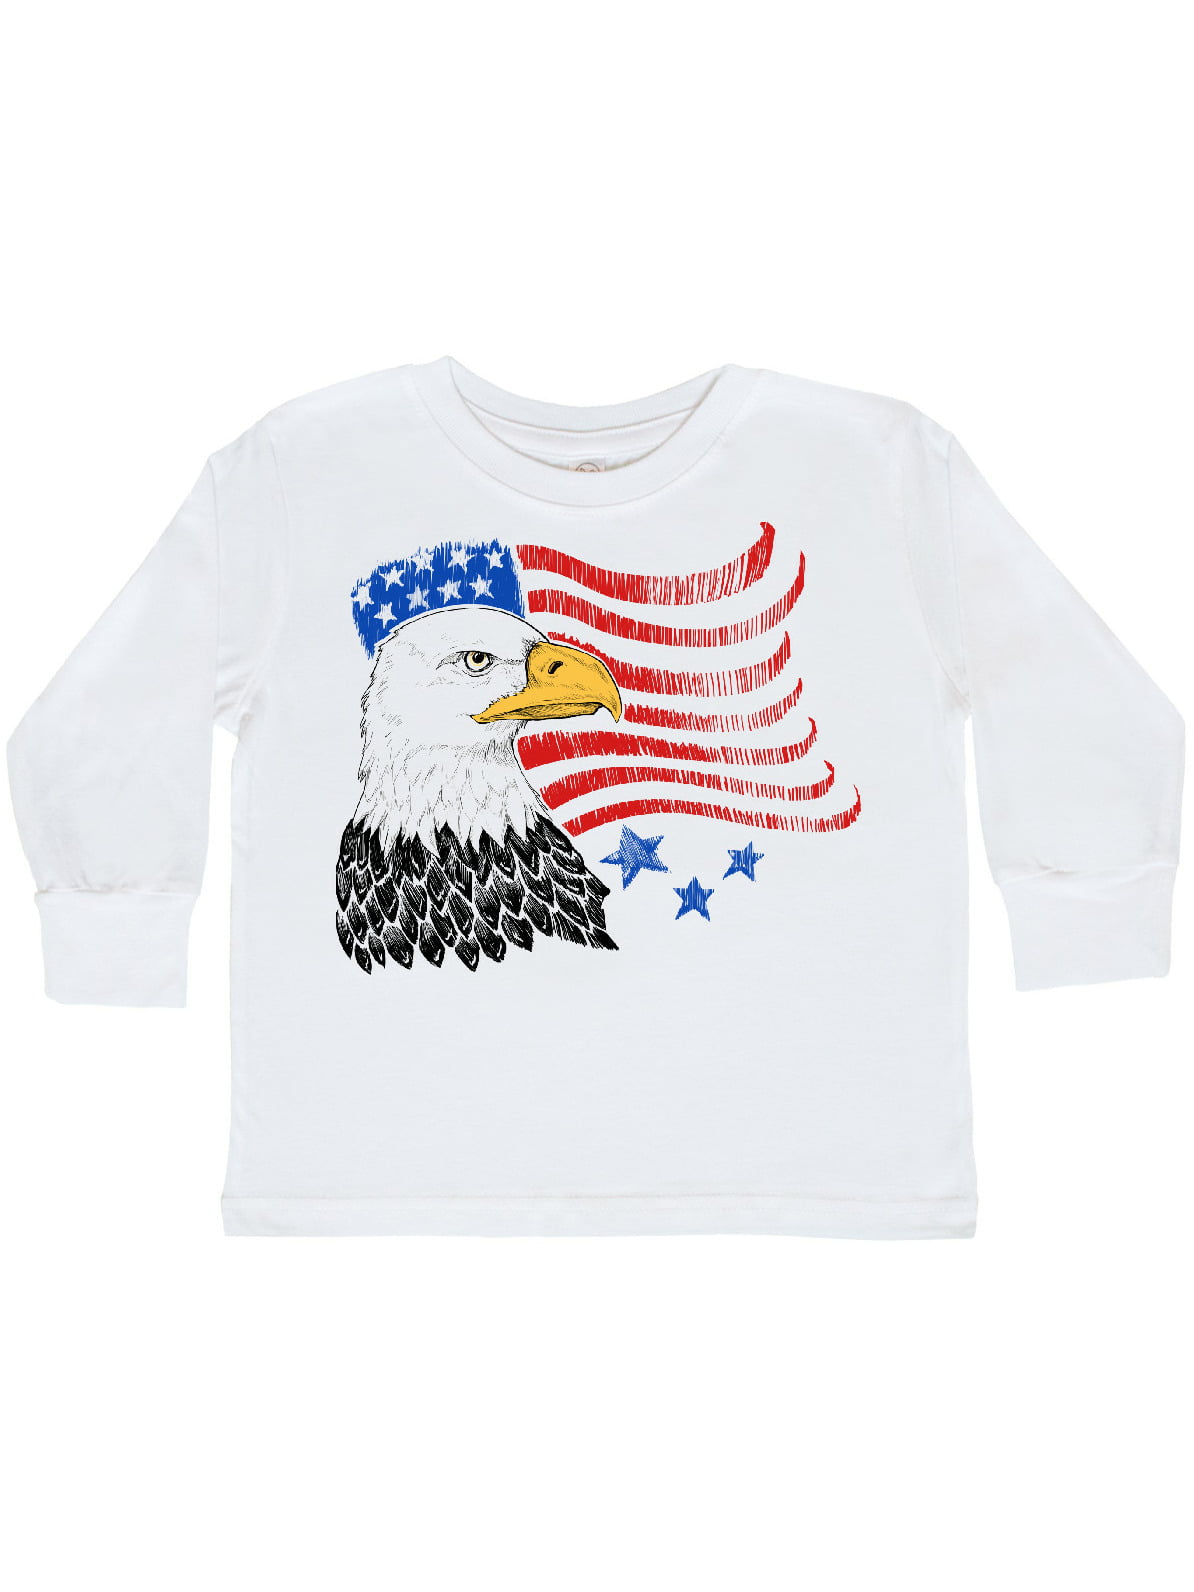 USA Eagle Mountain Bald Eagle Juniors T-shirt NOFO_00302